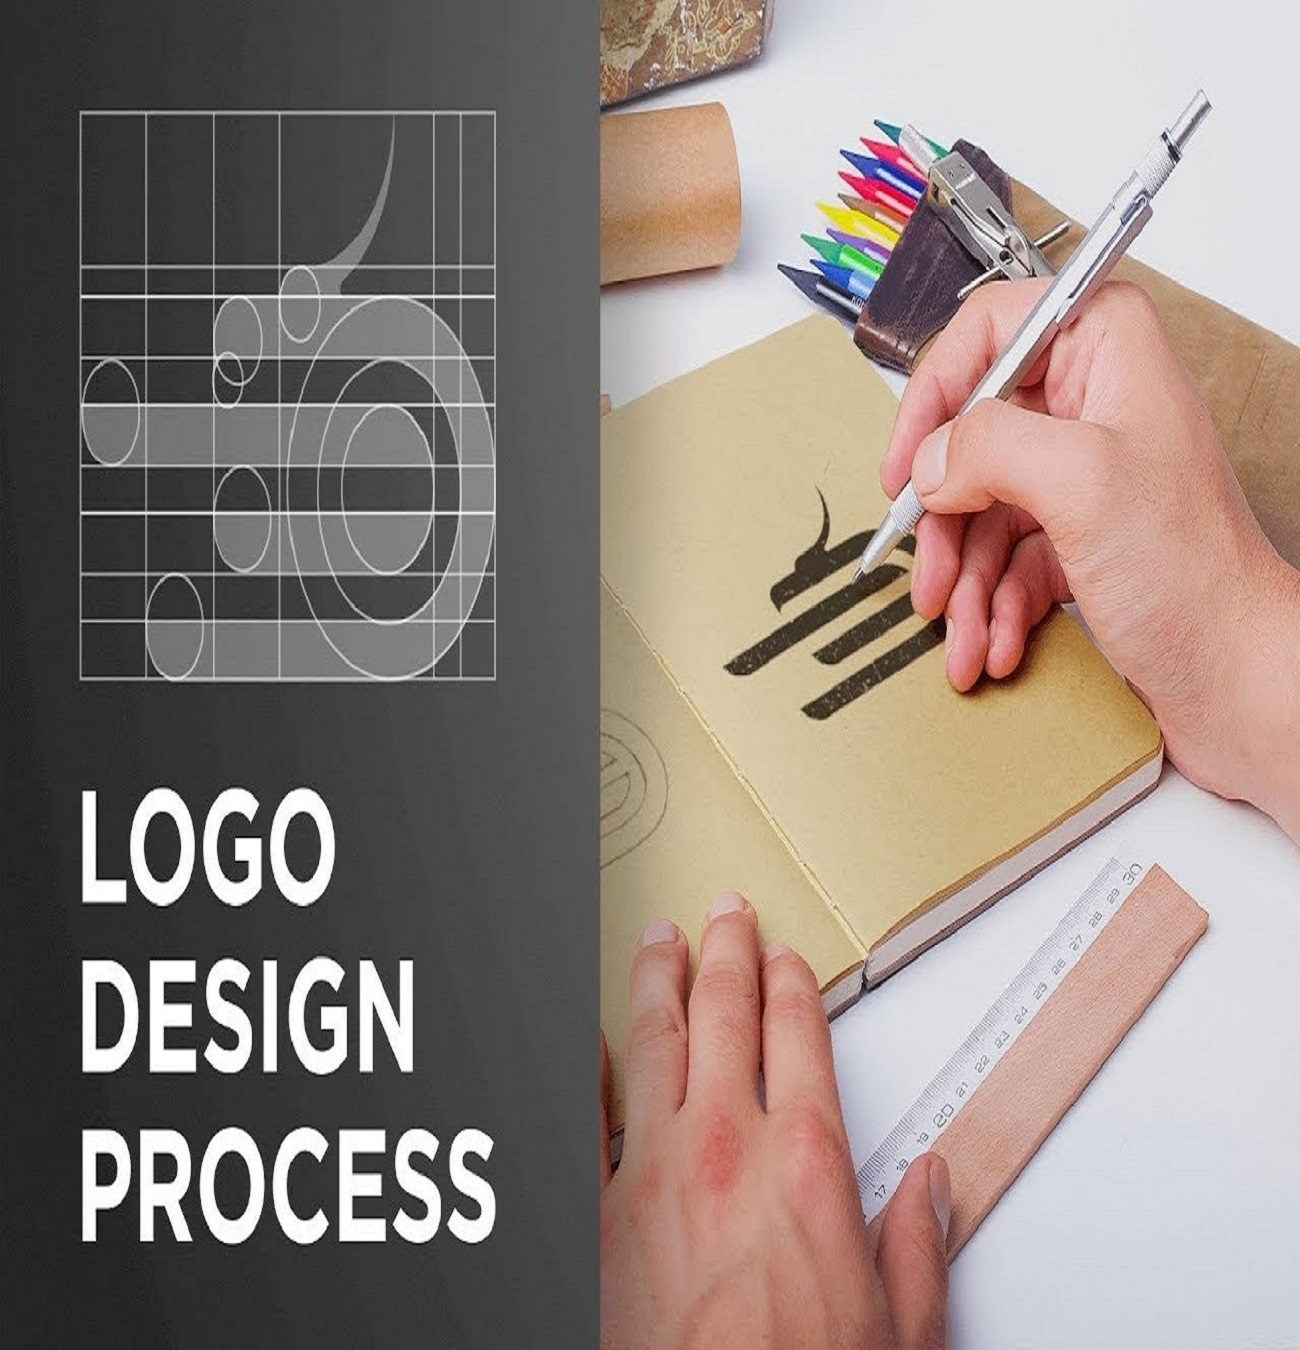  multan logo designing software company